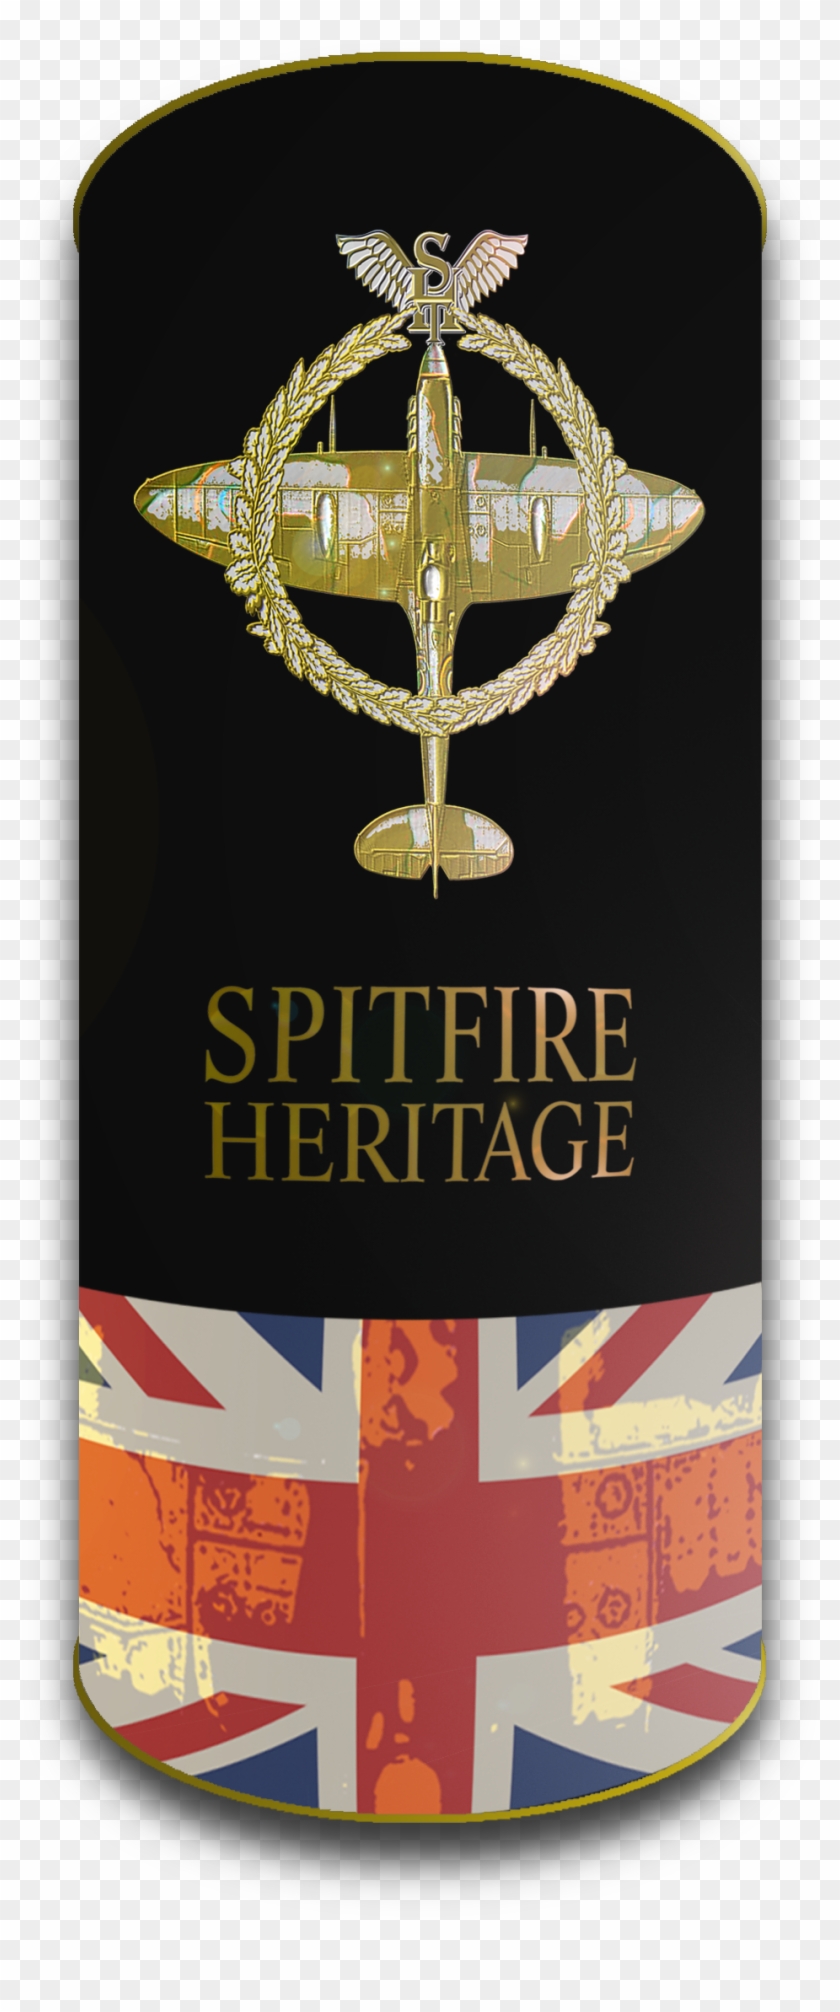 Spitfire Heritage Box - Emblem Clipart #4526556